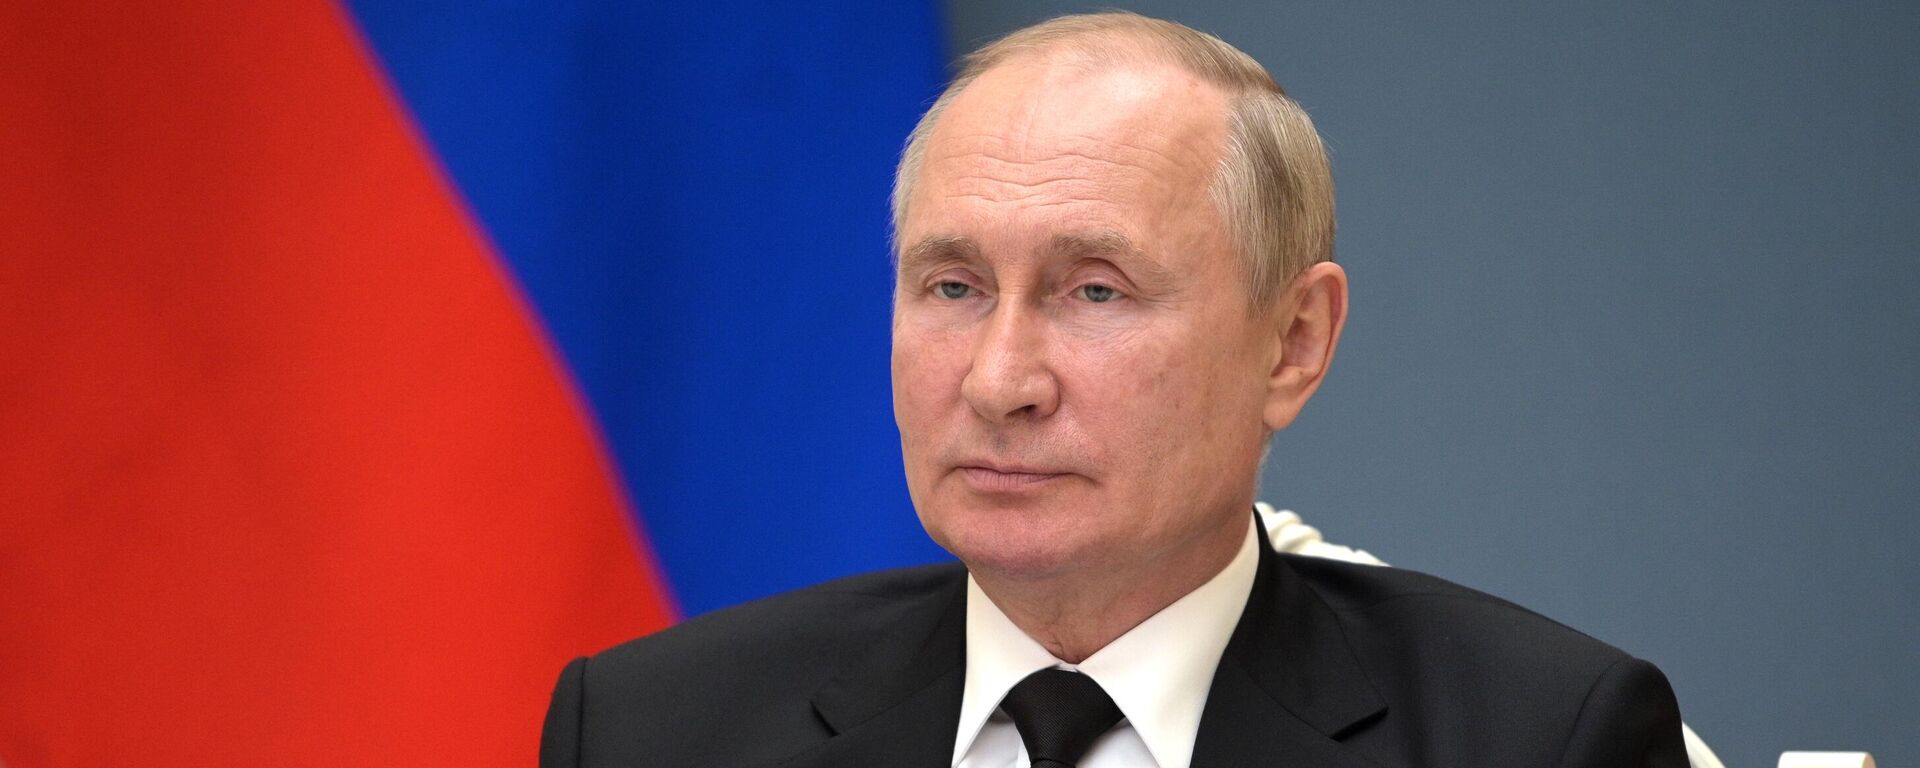 Rusijos prezidentas Vladimiras Putinas - Sputnik Lietuva, 1920, 22.10.2021